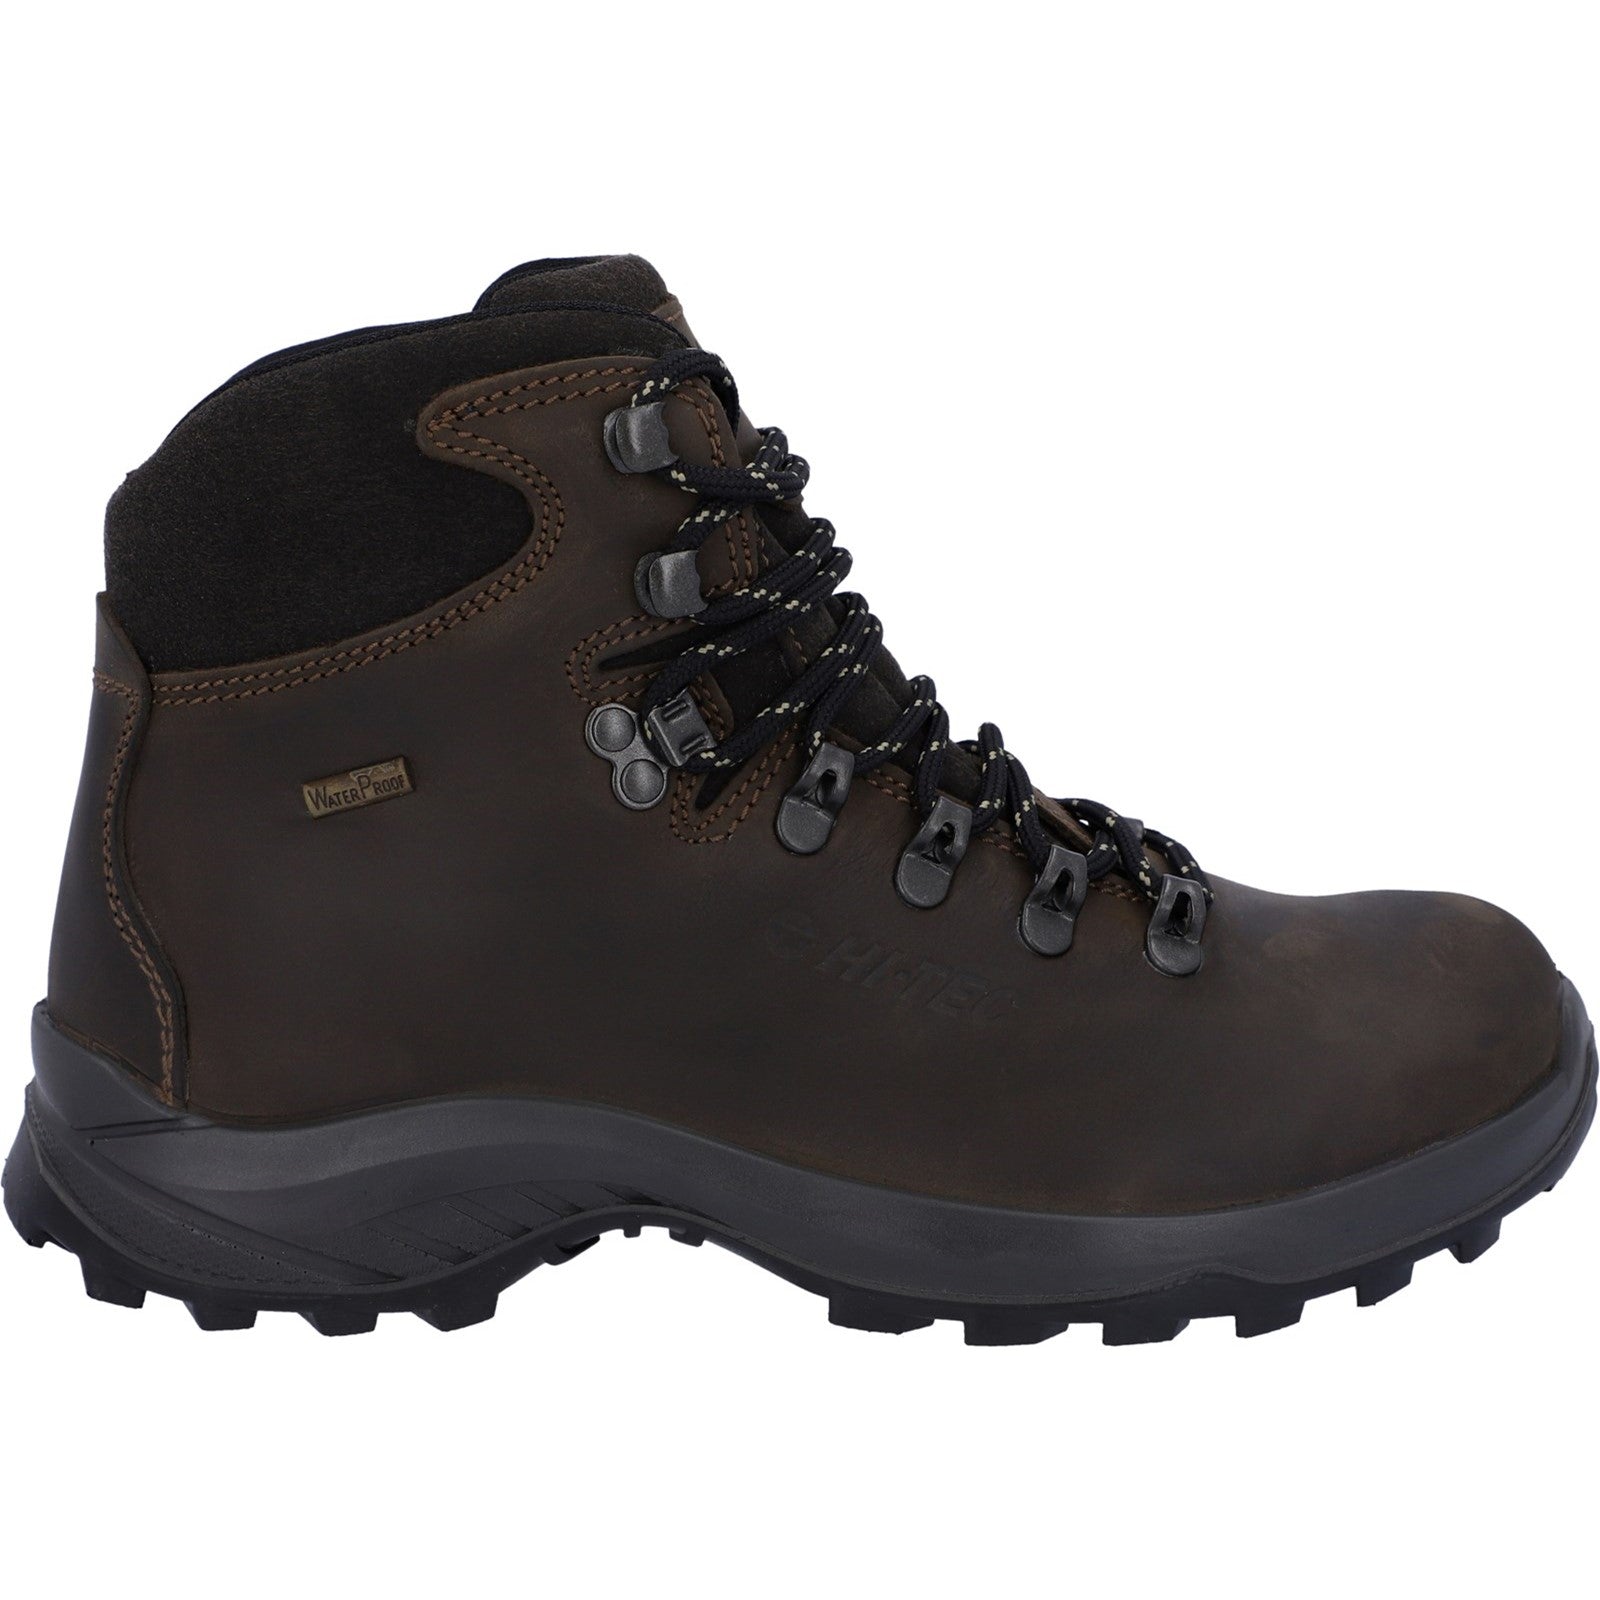 Hi-Tec Womens Ravine Lite Leather Hiking Boots - Brown